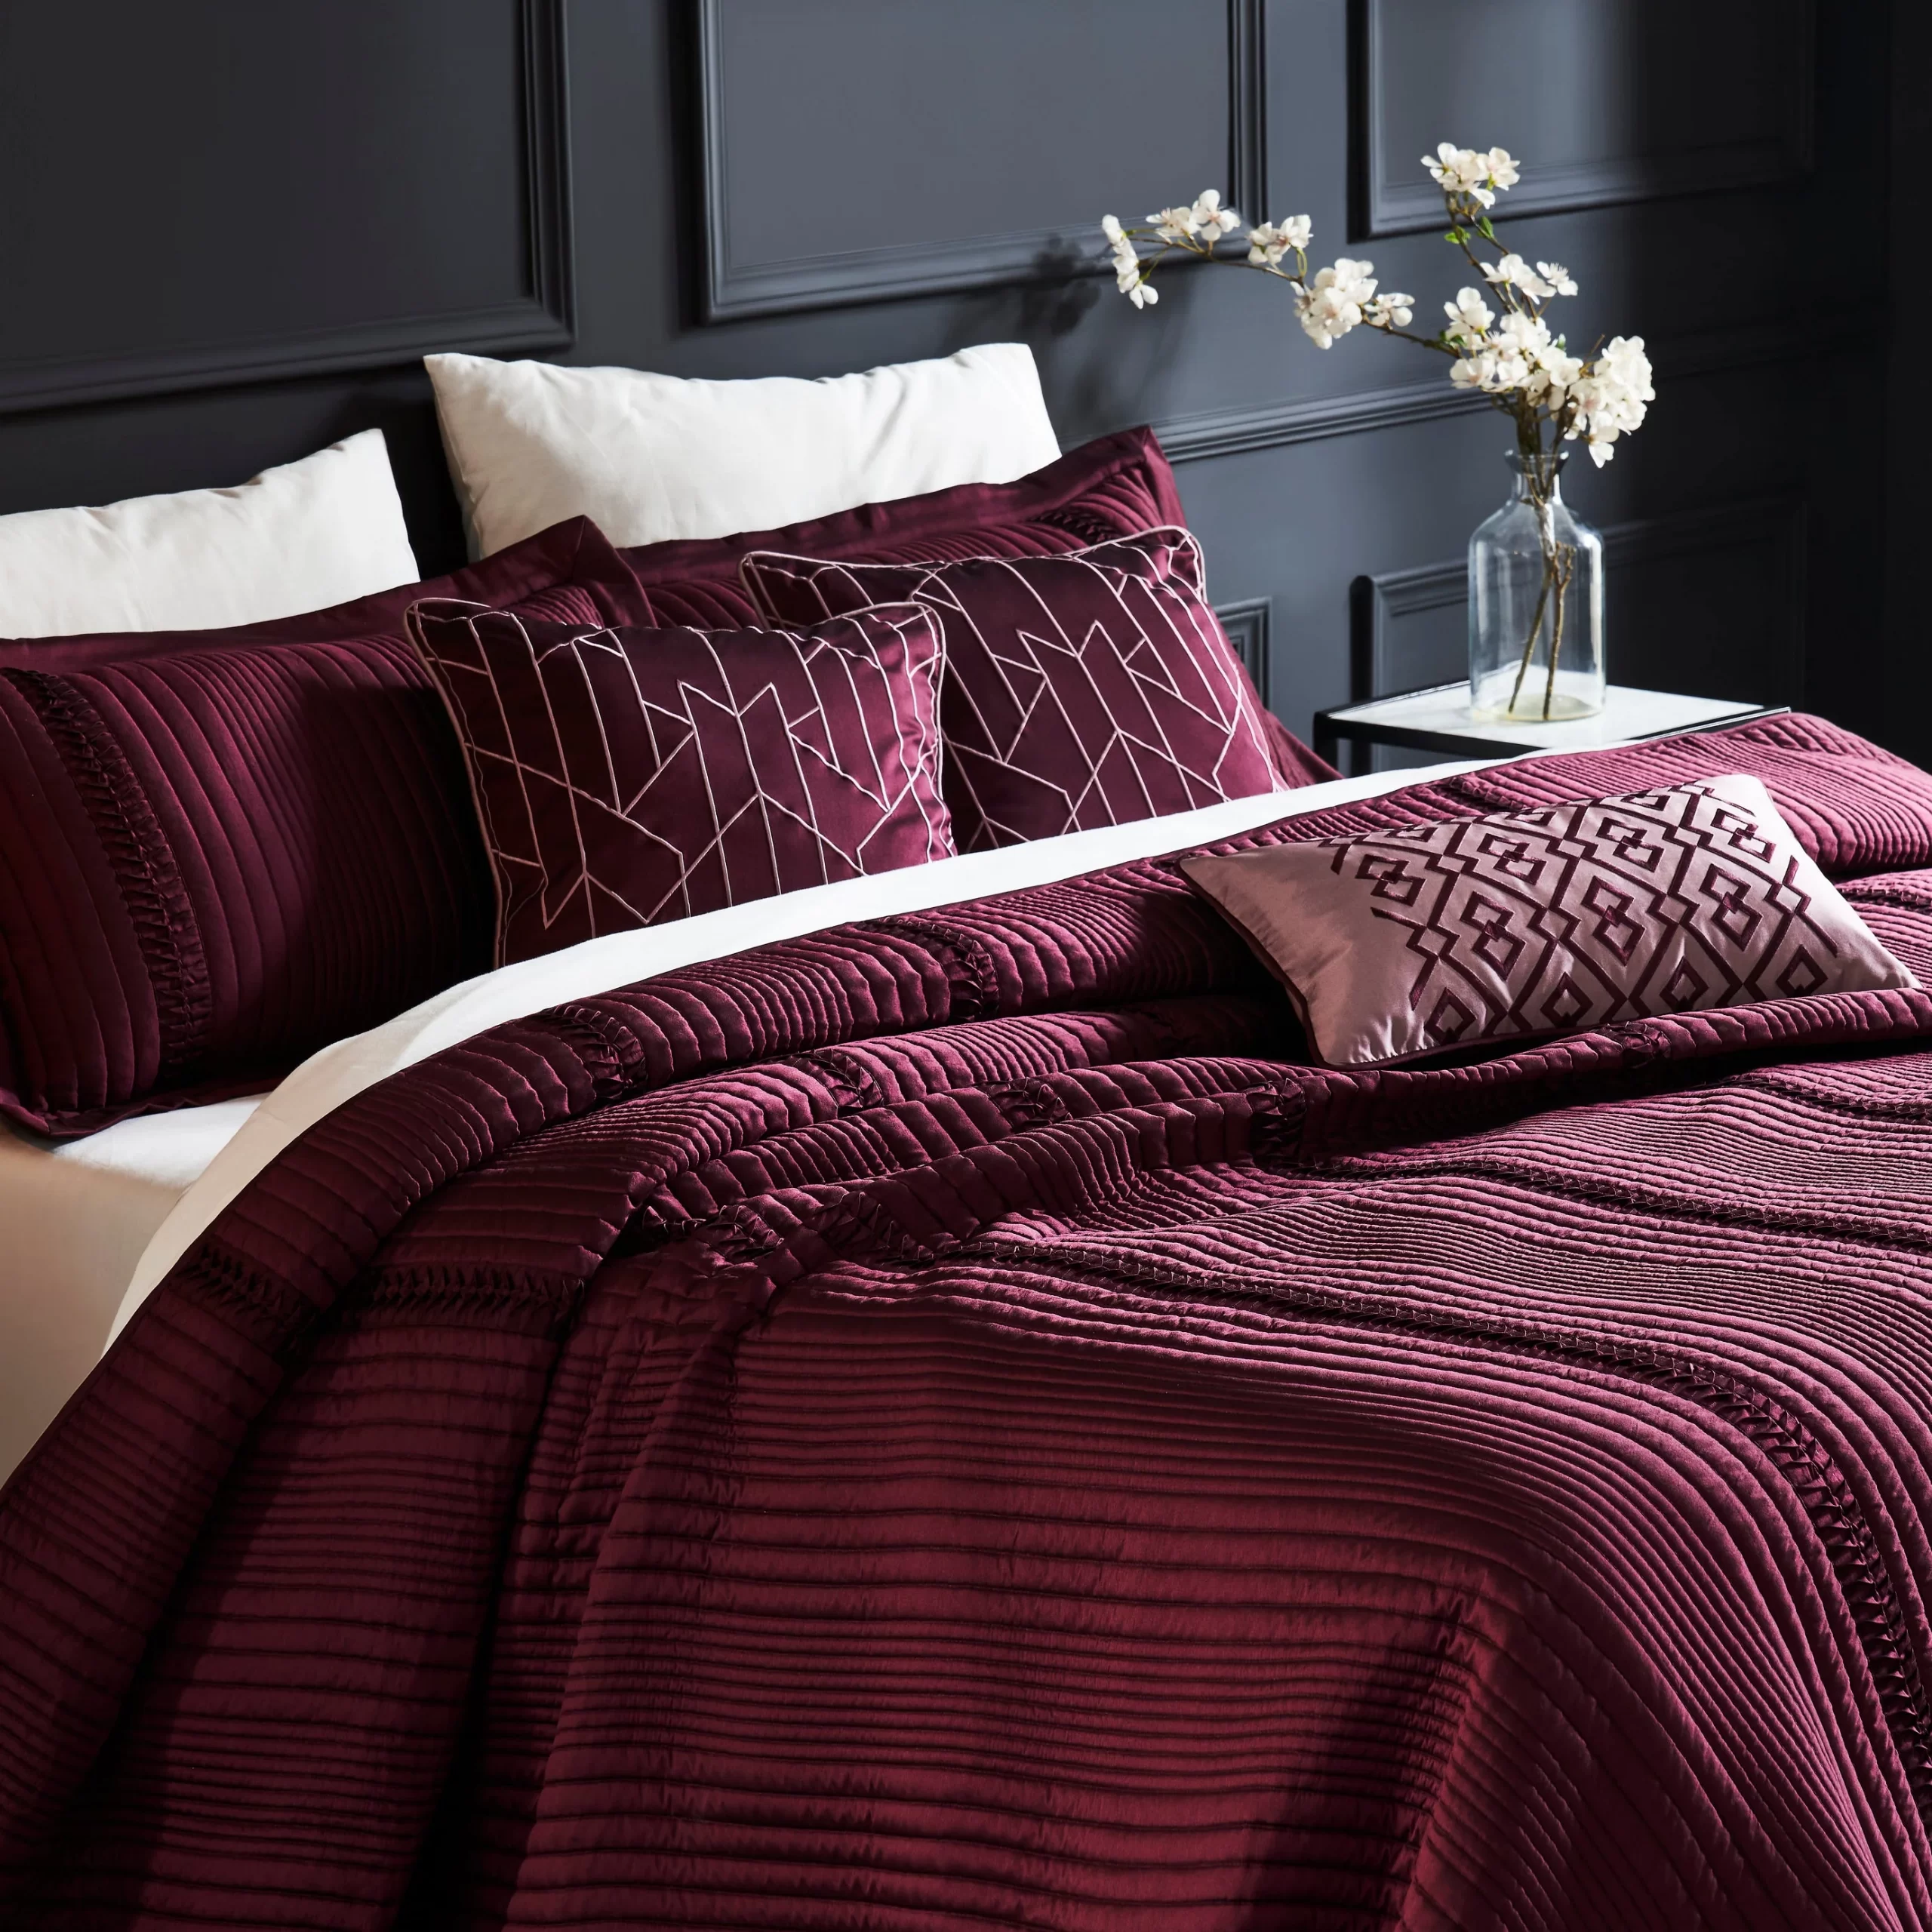 8 Ways to Style Your Luxury Bedding Set